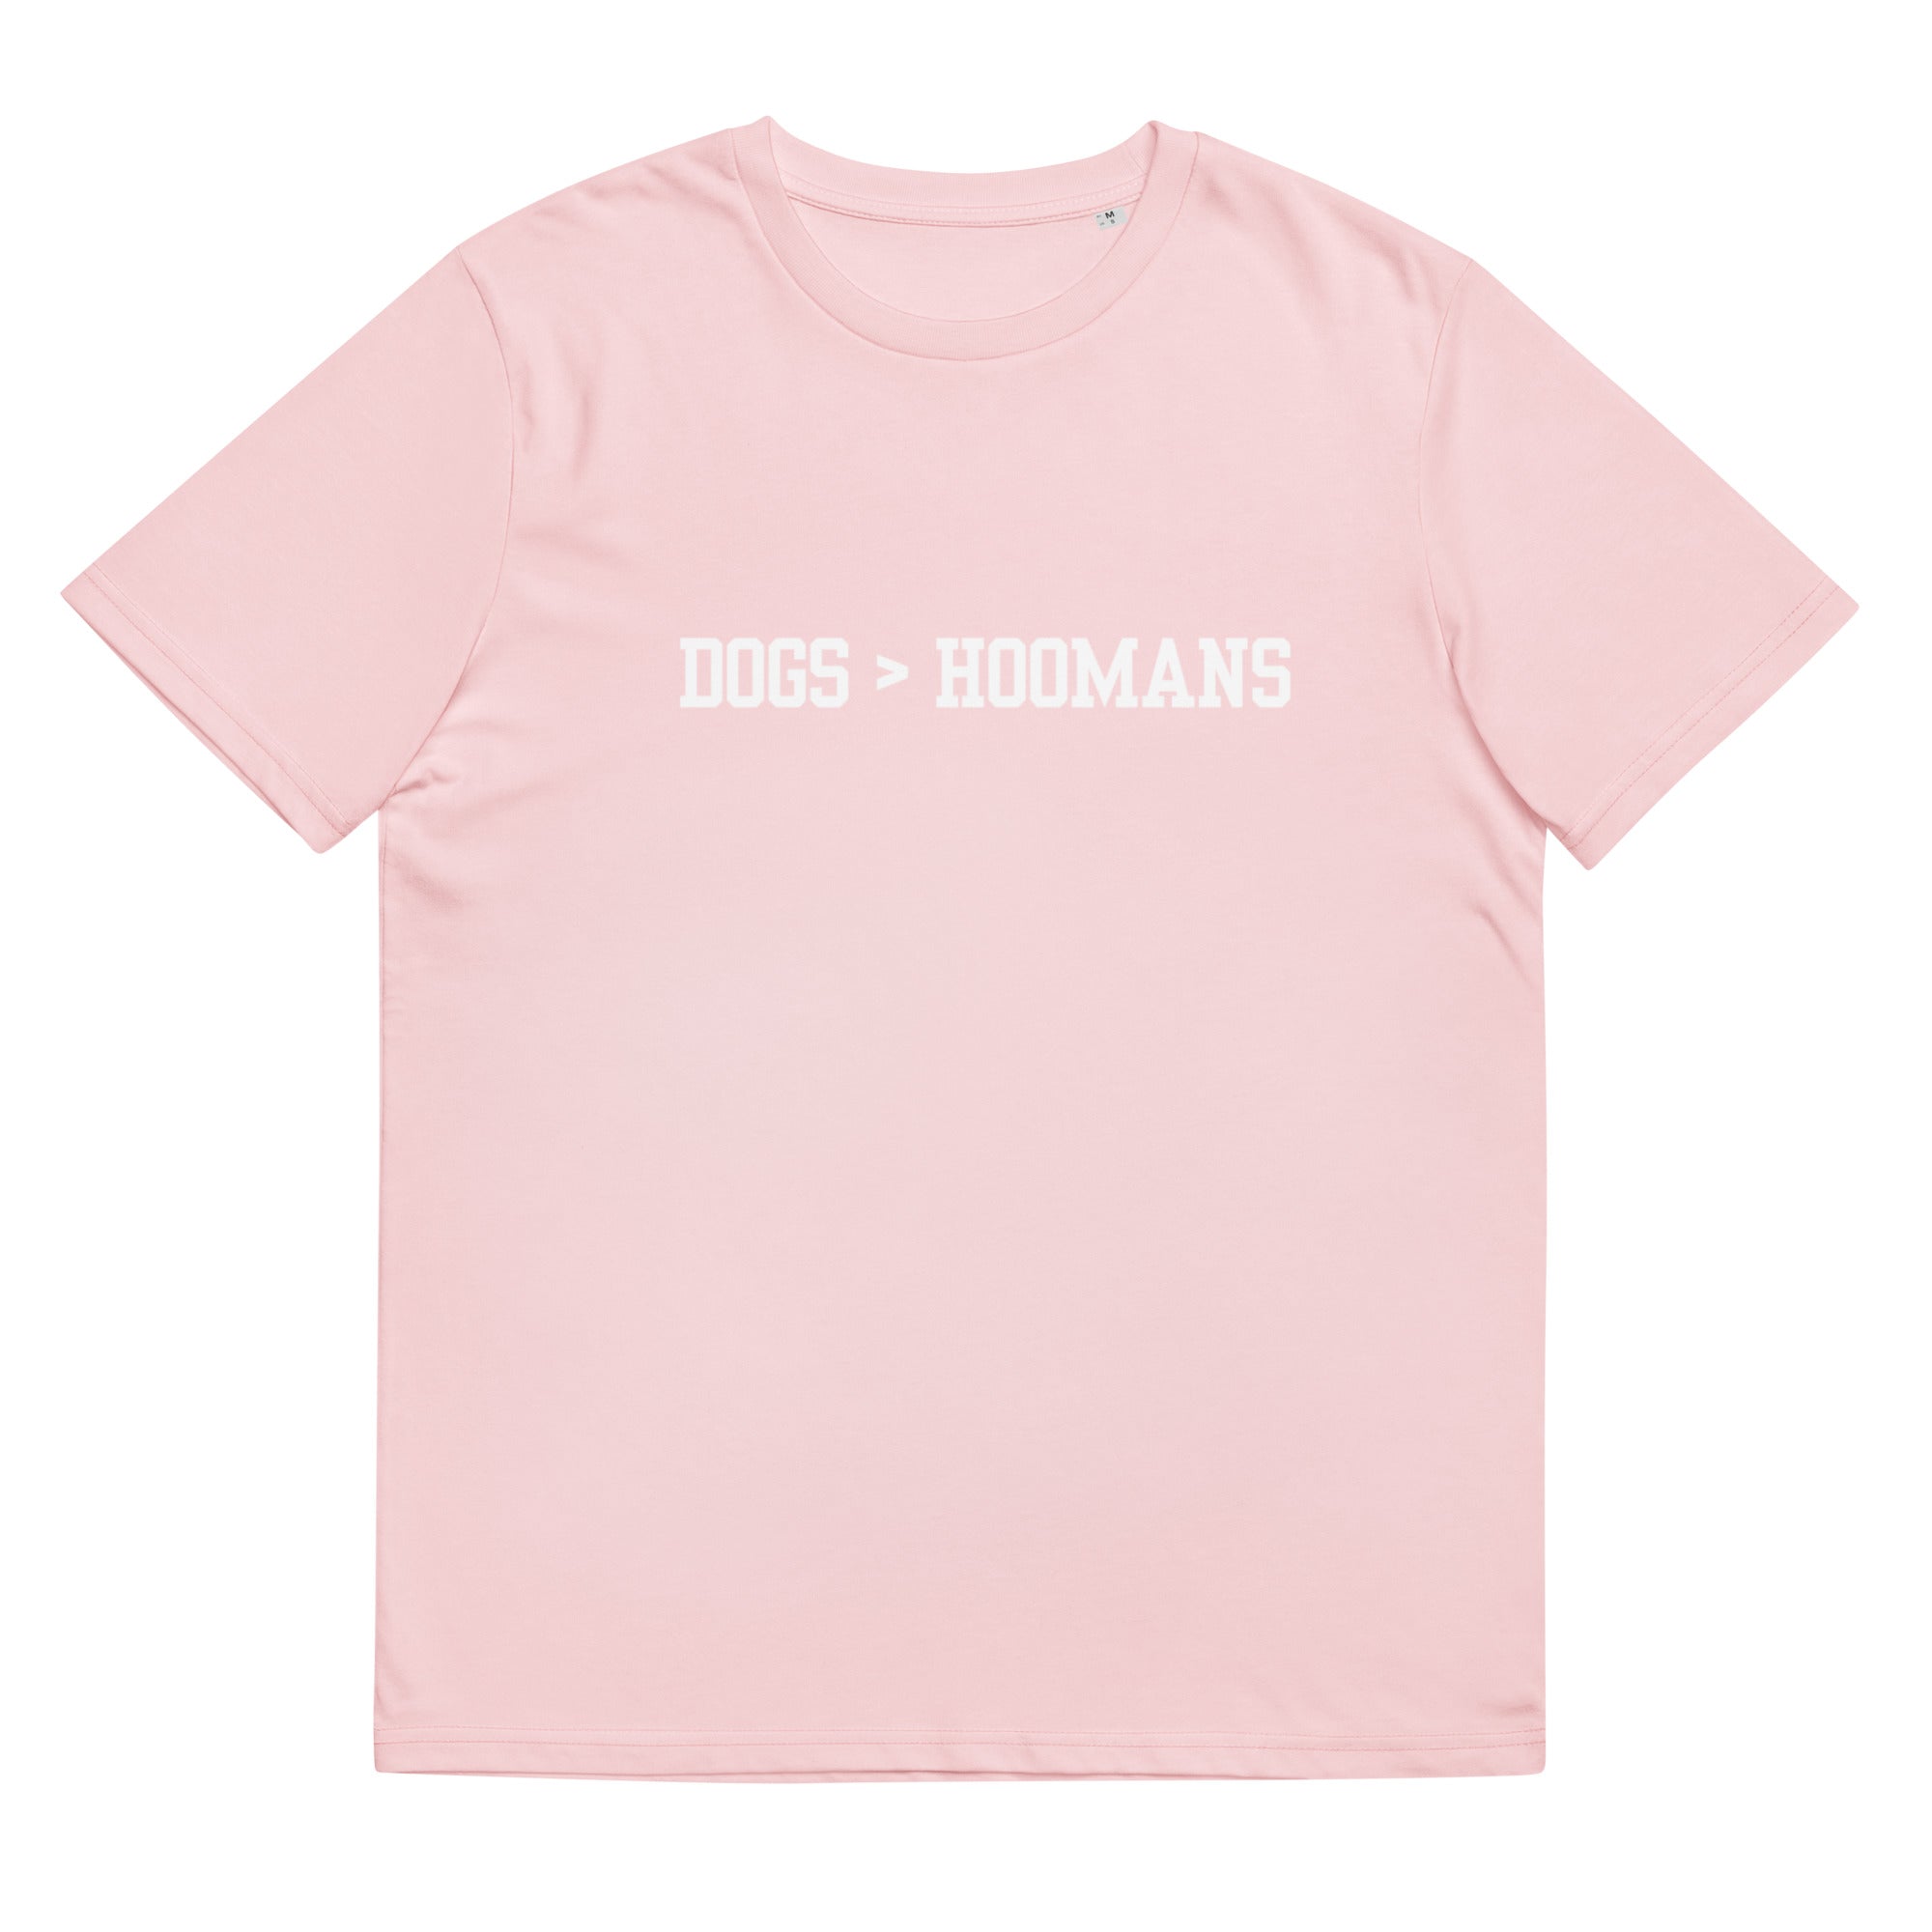 Dogs > Hoomans (Humans) Unisex Organic Cotton T-shirt